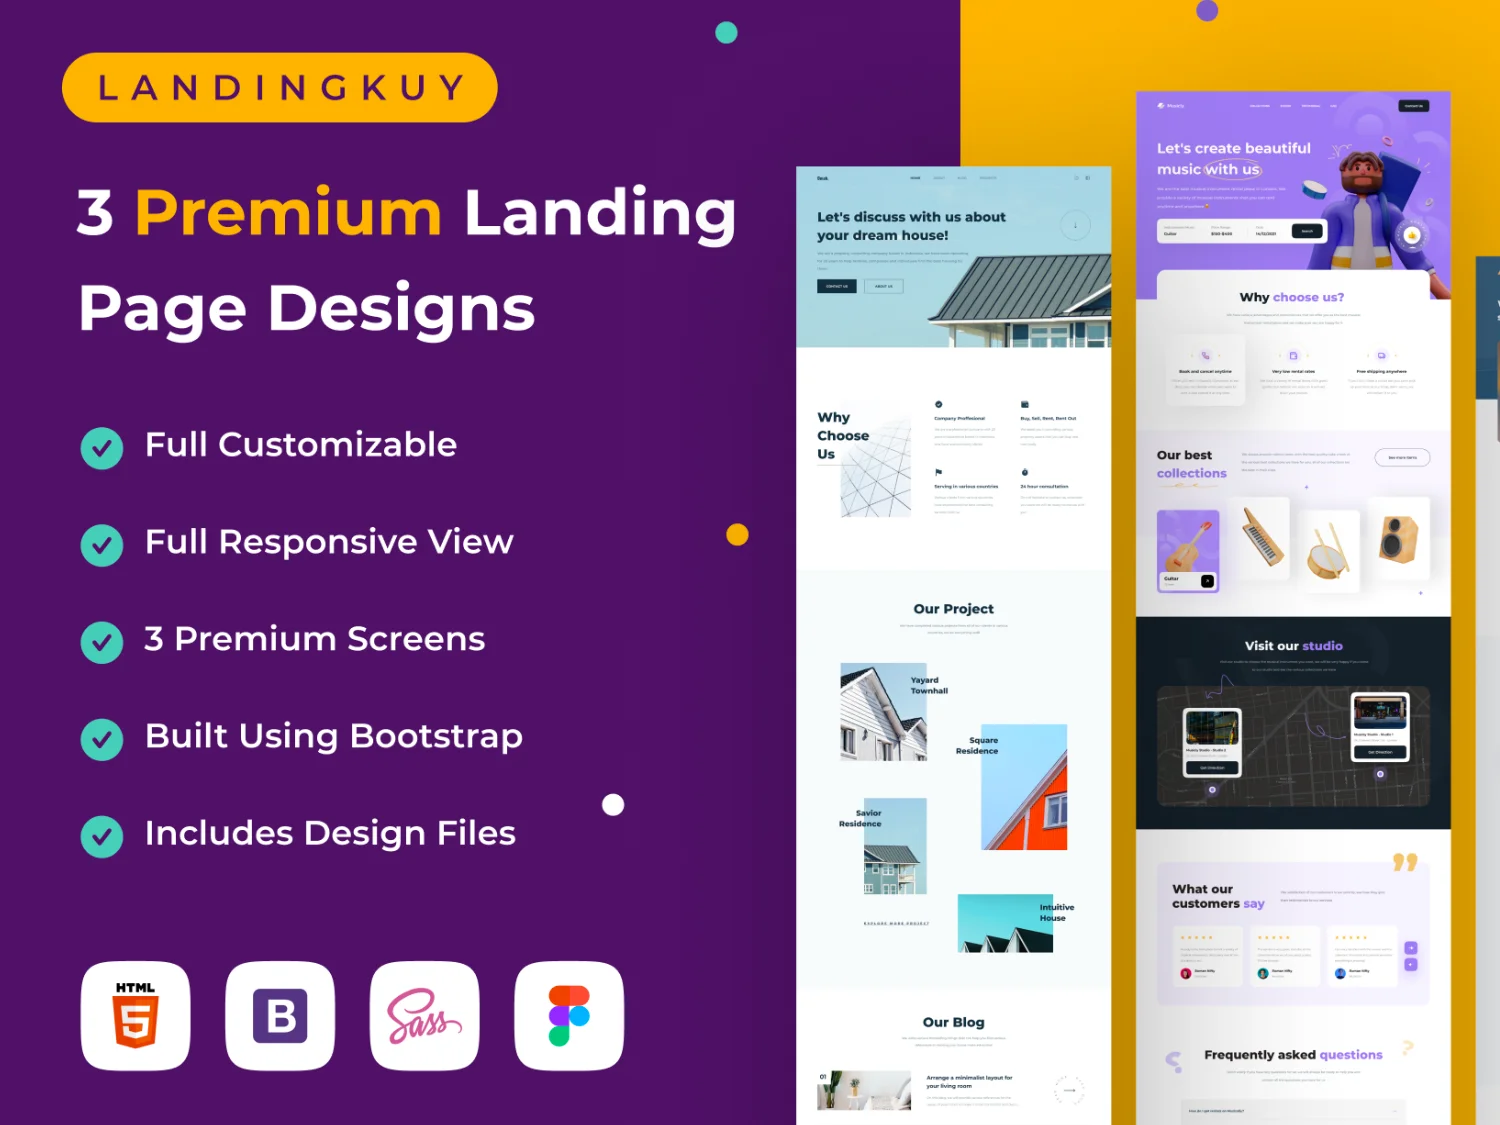 [VIP] LANDINGKUY: Landing Page Design Templates